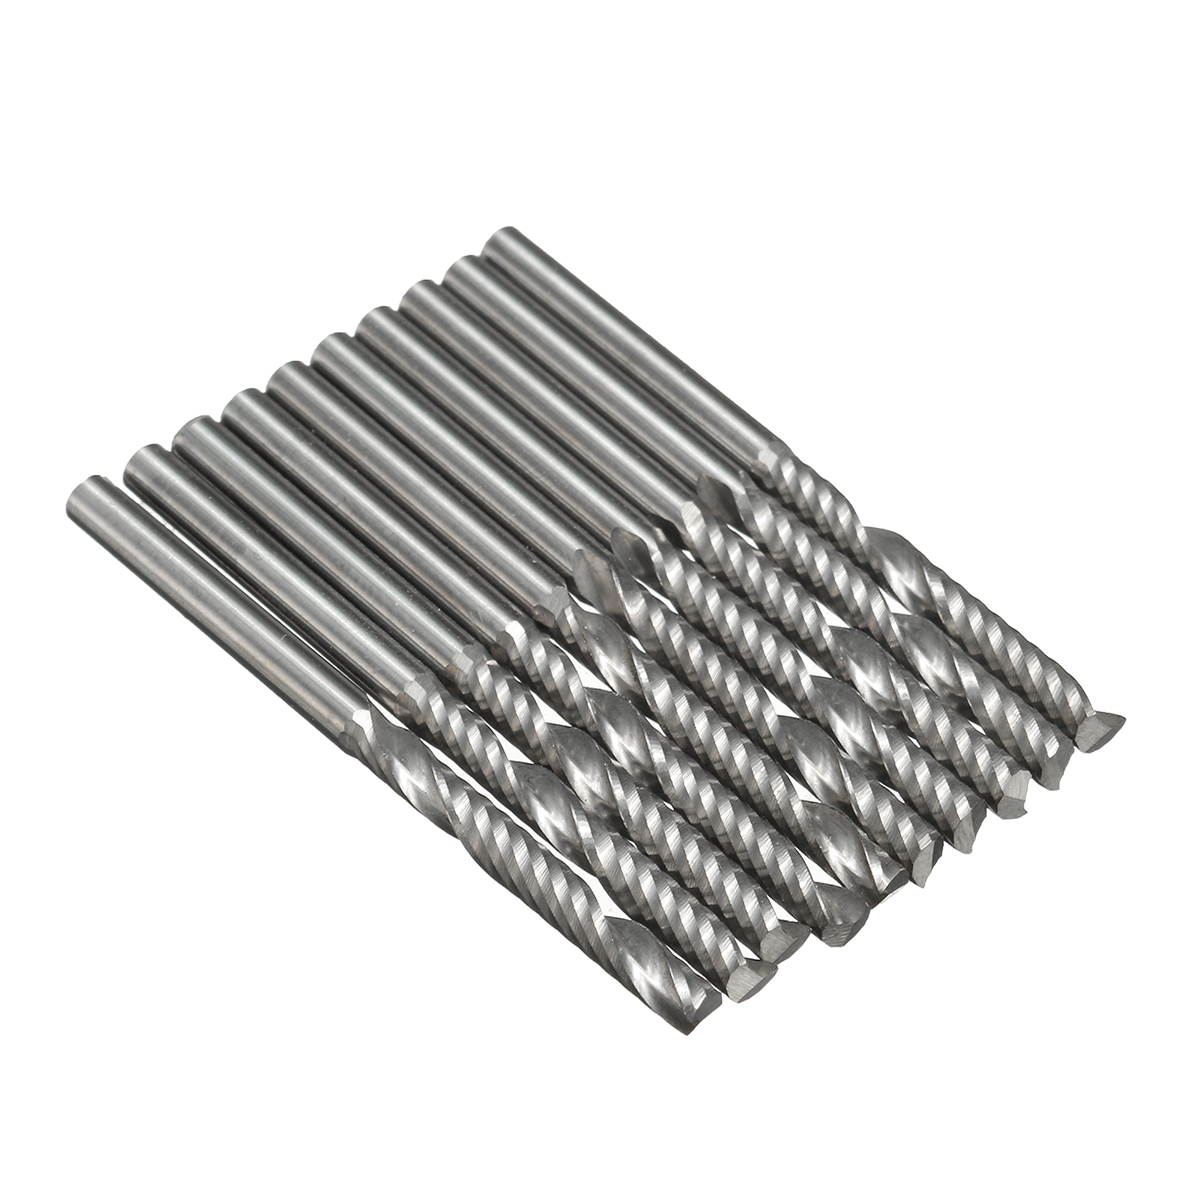 Drillpro-DB-M7-10pcs-18-Inch-Shank-End-Mill-Cutter-1-Flute-Carbide-Spiral-Milling-Cutter-1033261-4